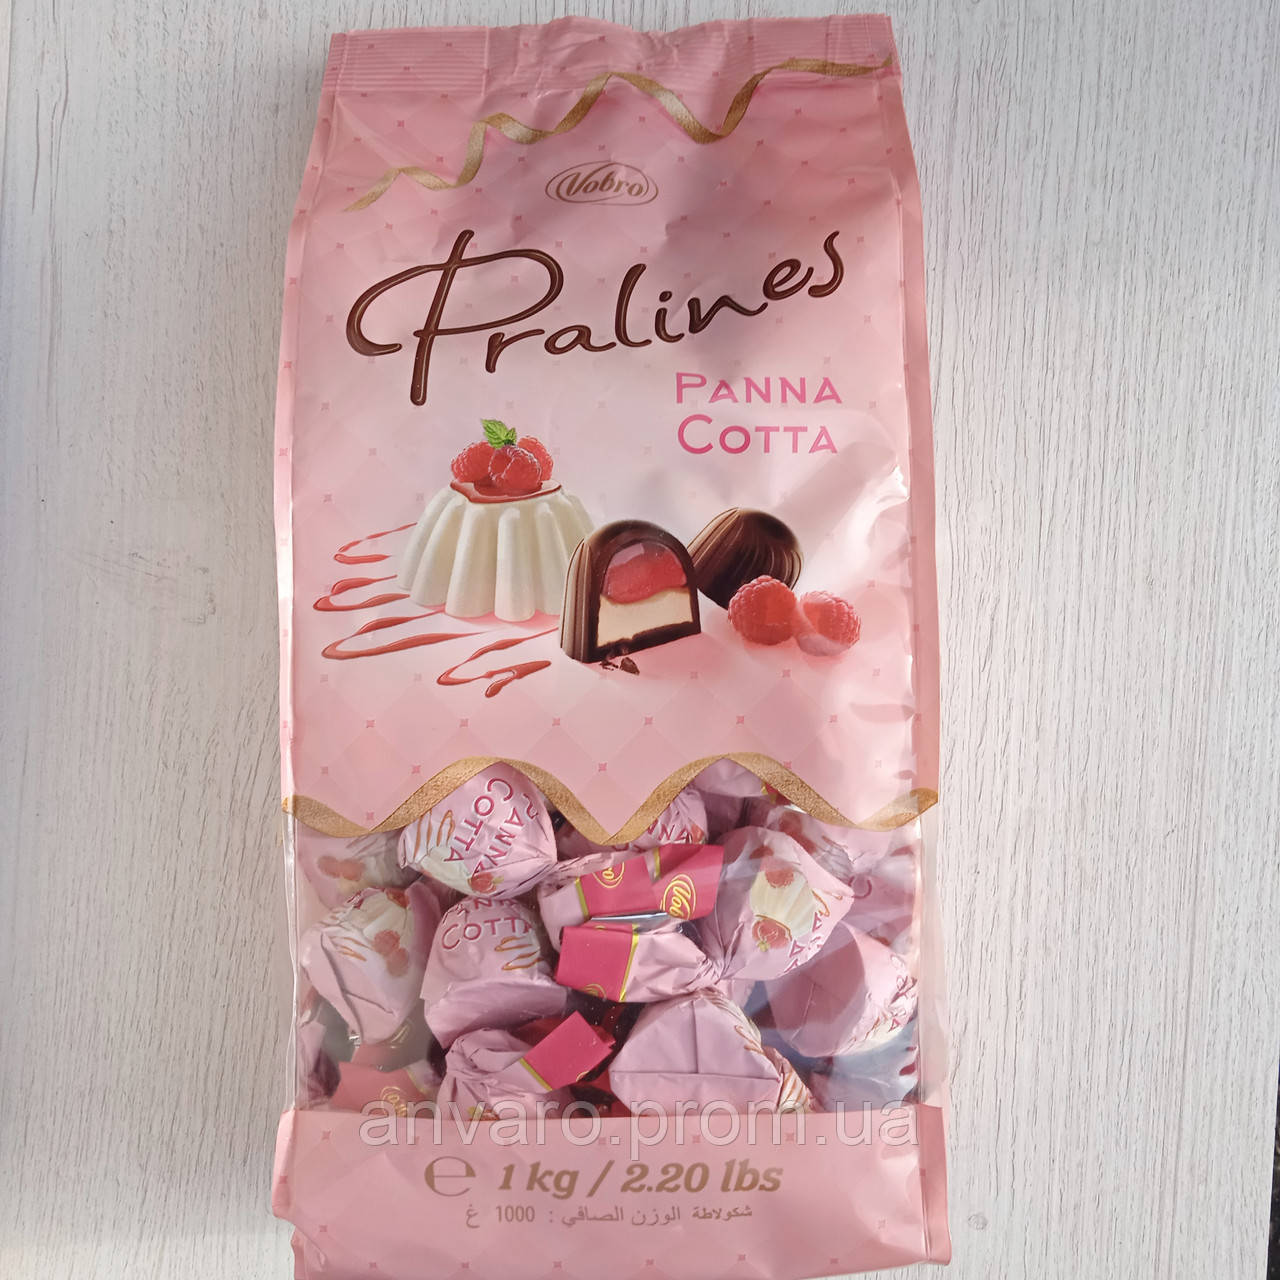 Шоколадні цукерки Vobro Pralines Panna Cotta 1kg (2шт/ящ)